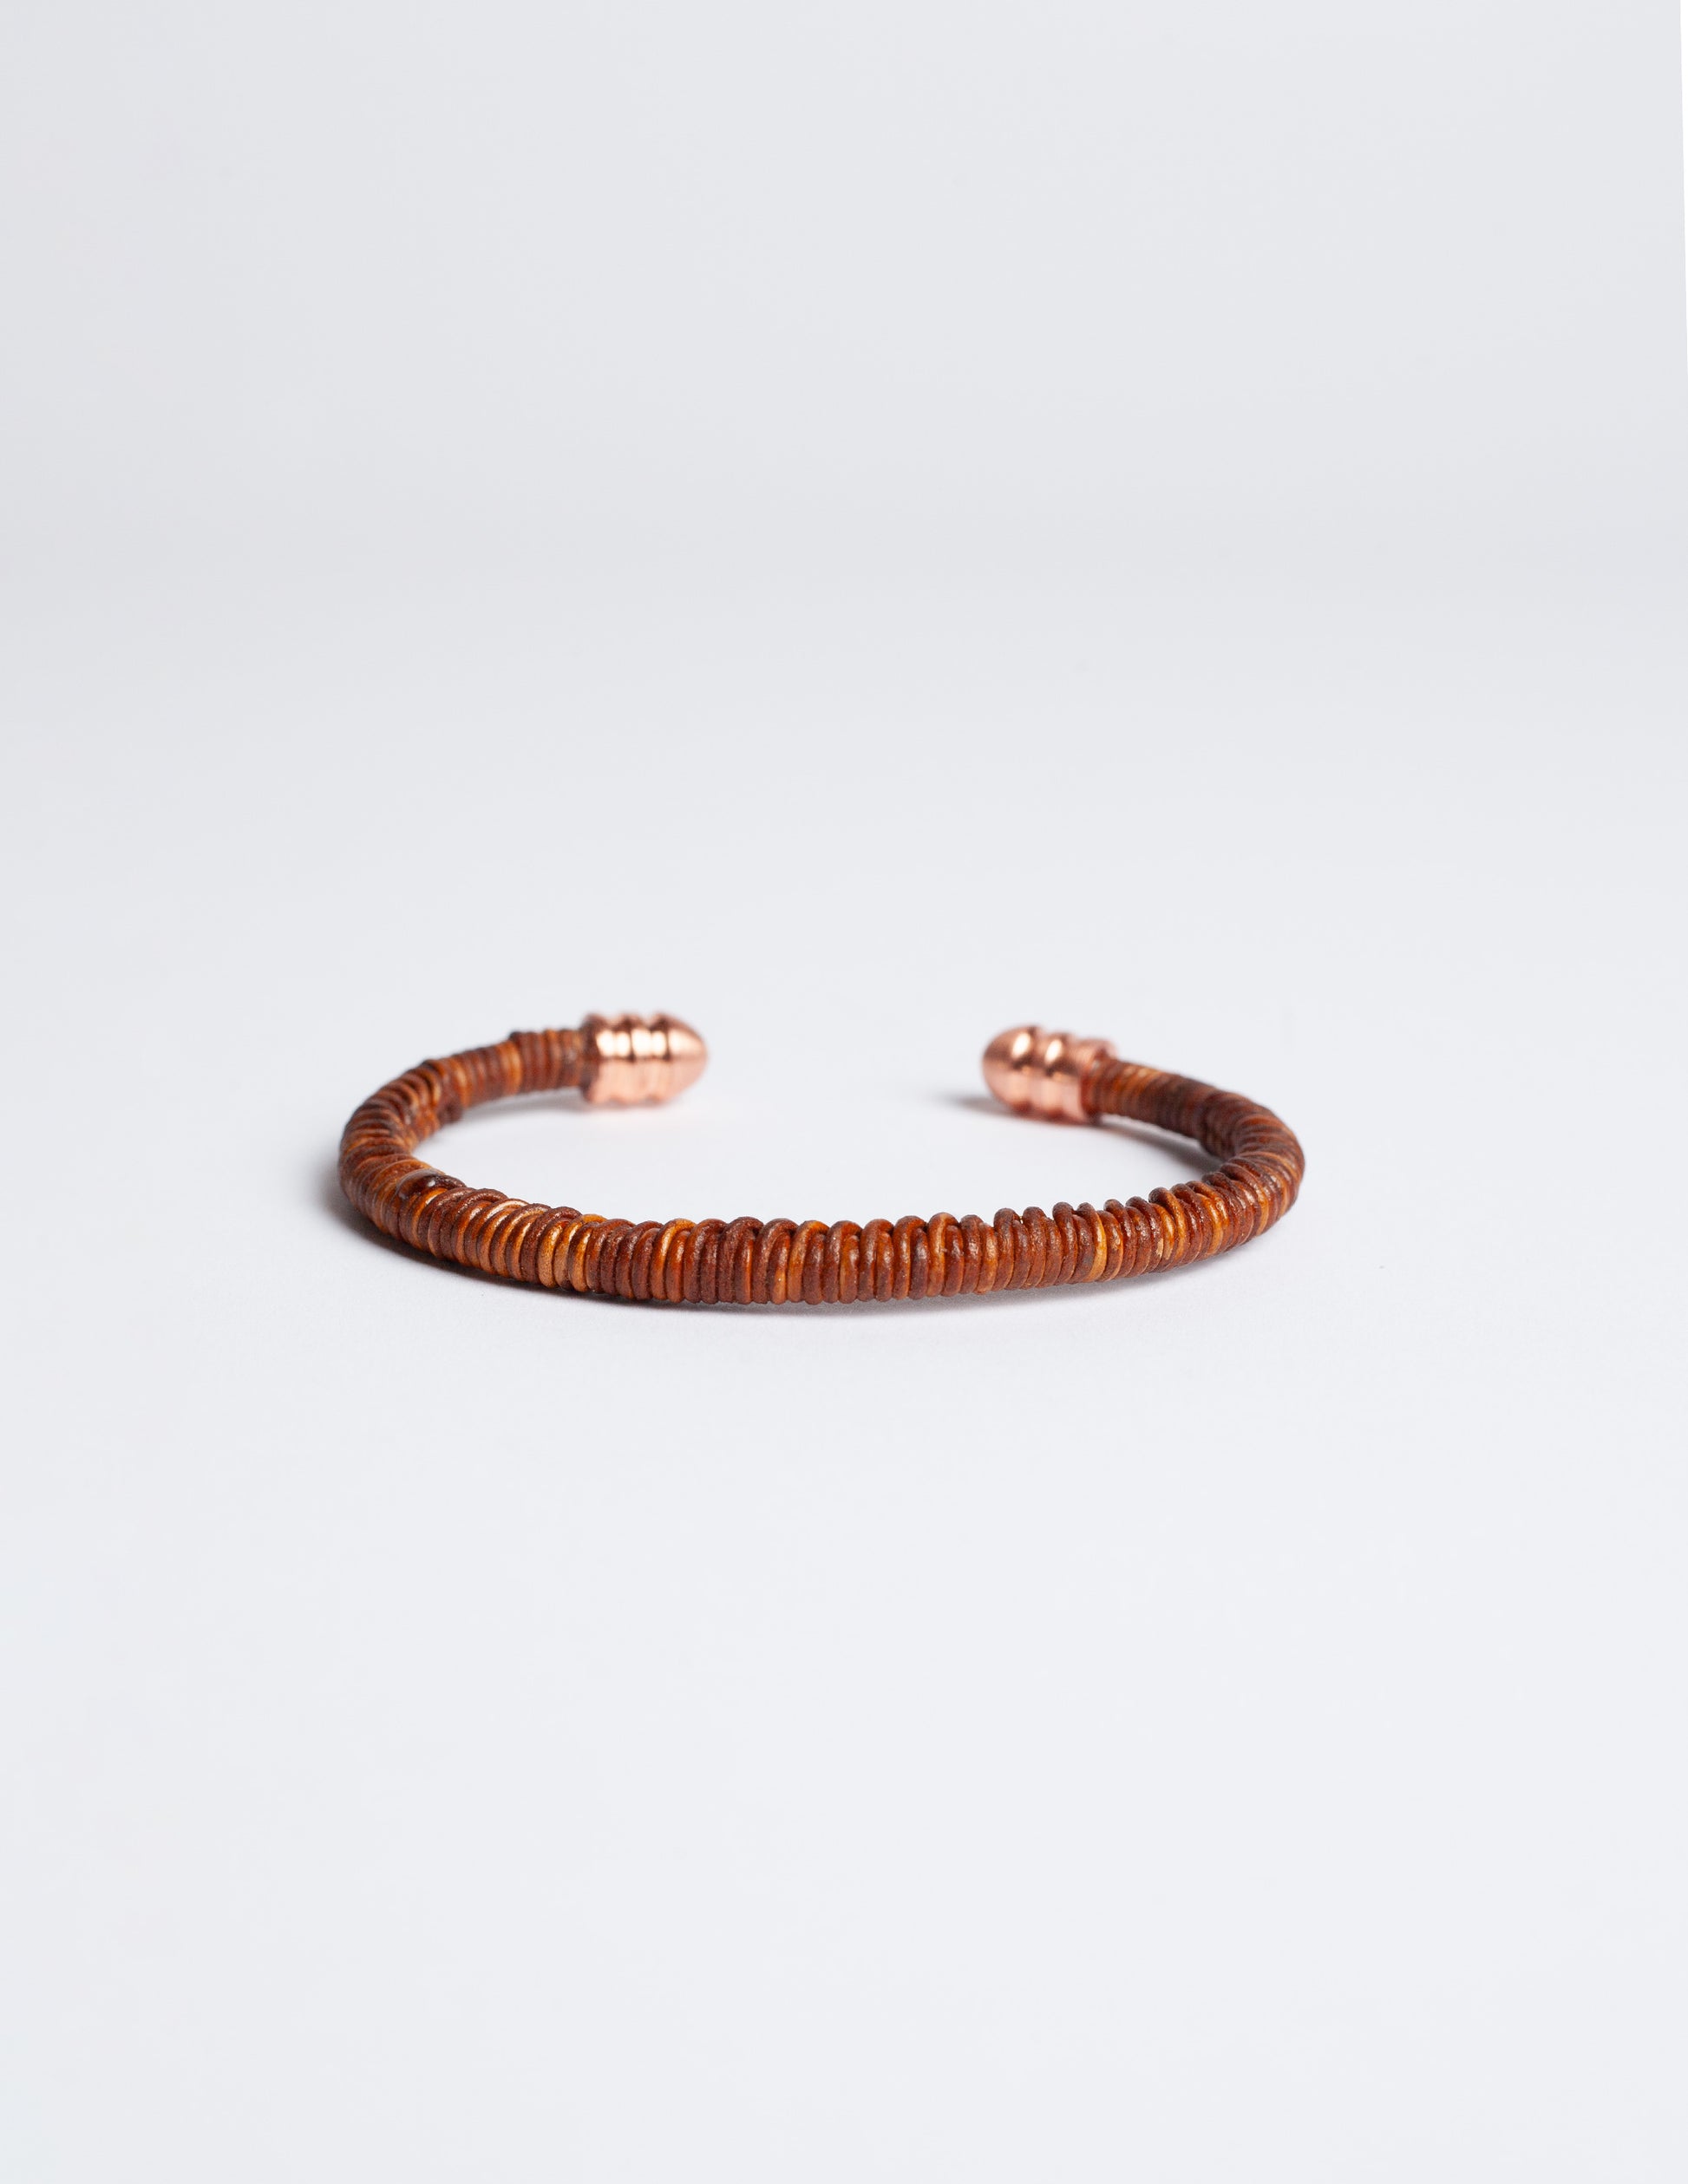 Rivay Helio Ascari Thin Leather Wrapped Copper Cuff Bracelet